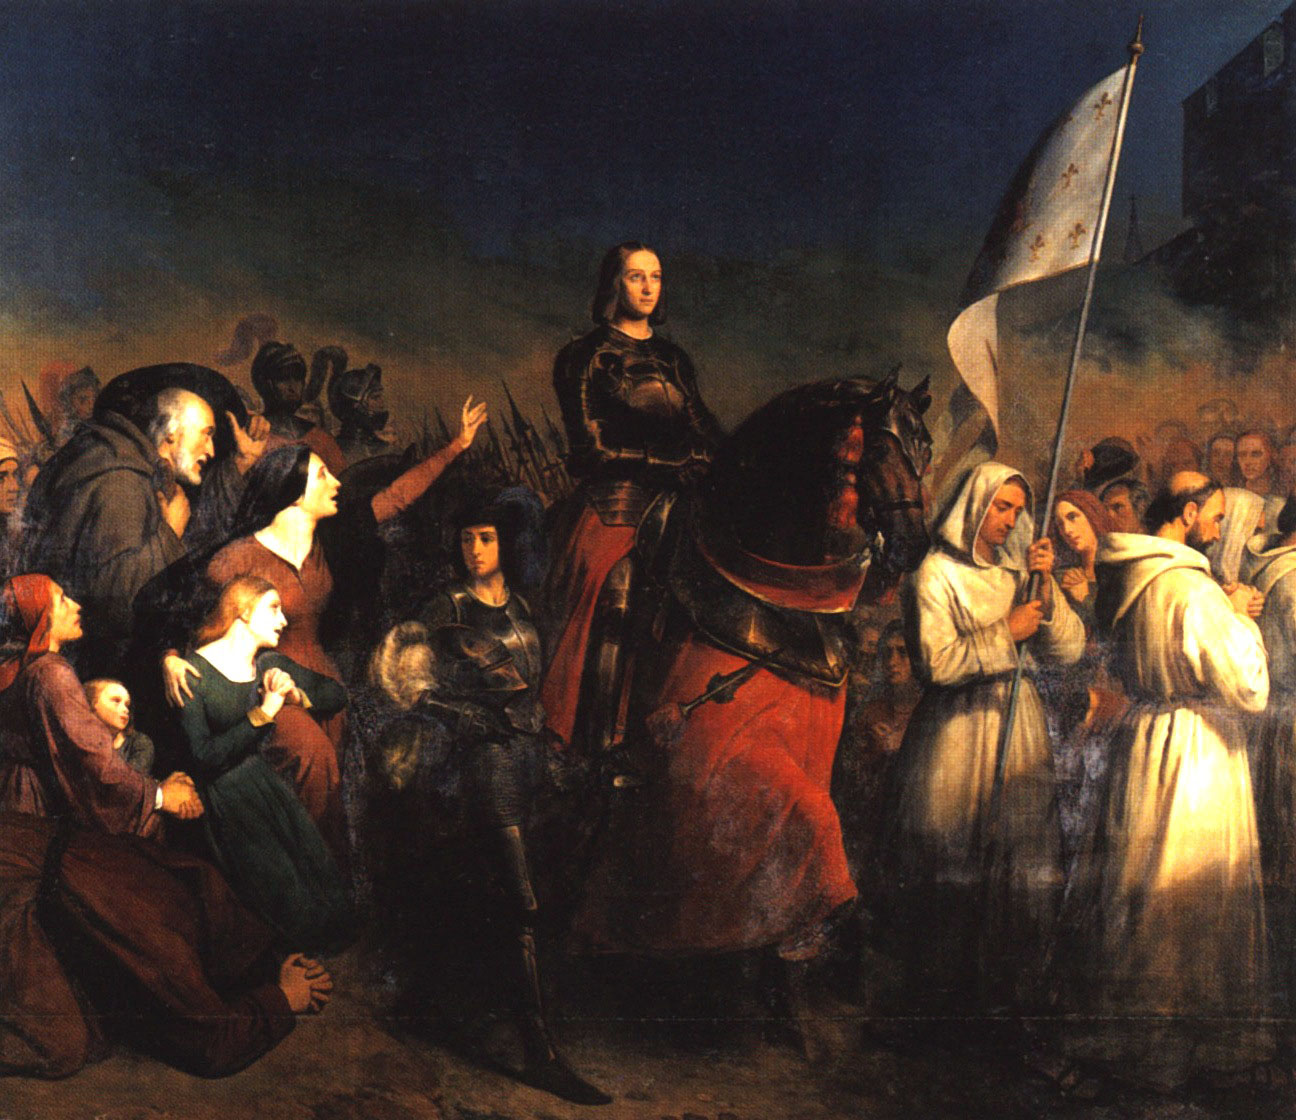 Анри Шиффер. "Въезд Жанны д'Арк в Орлеан 8 мая 1429 года". 1843.